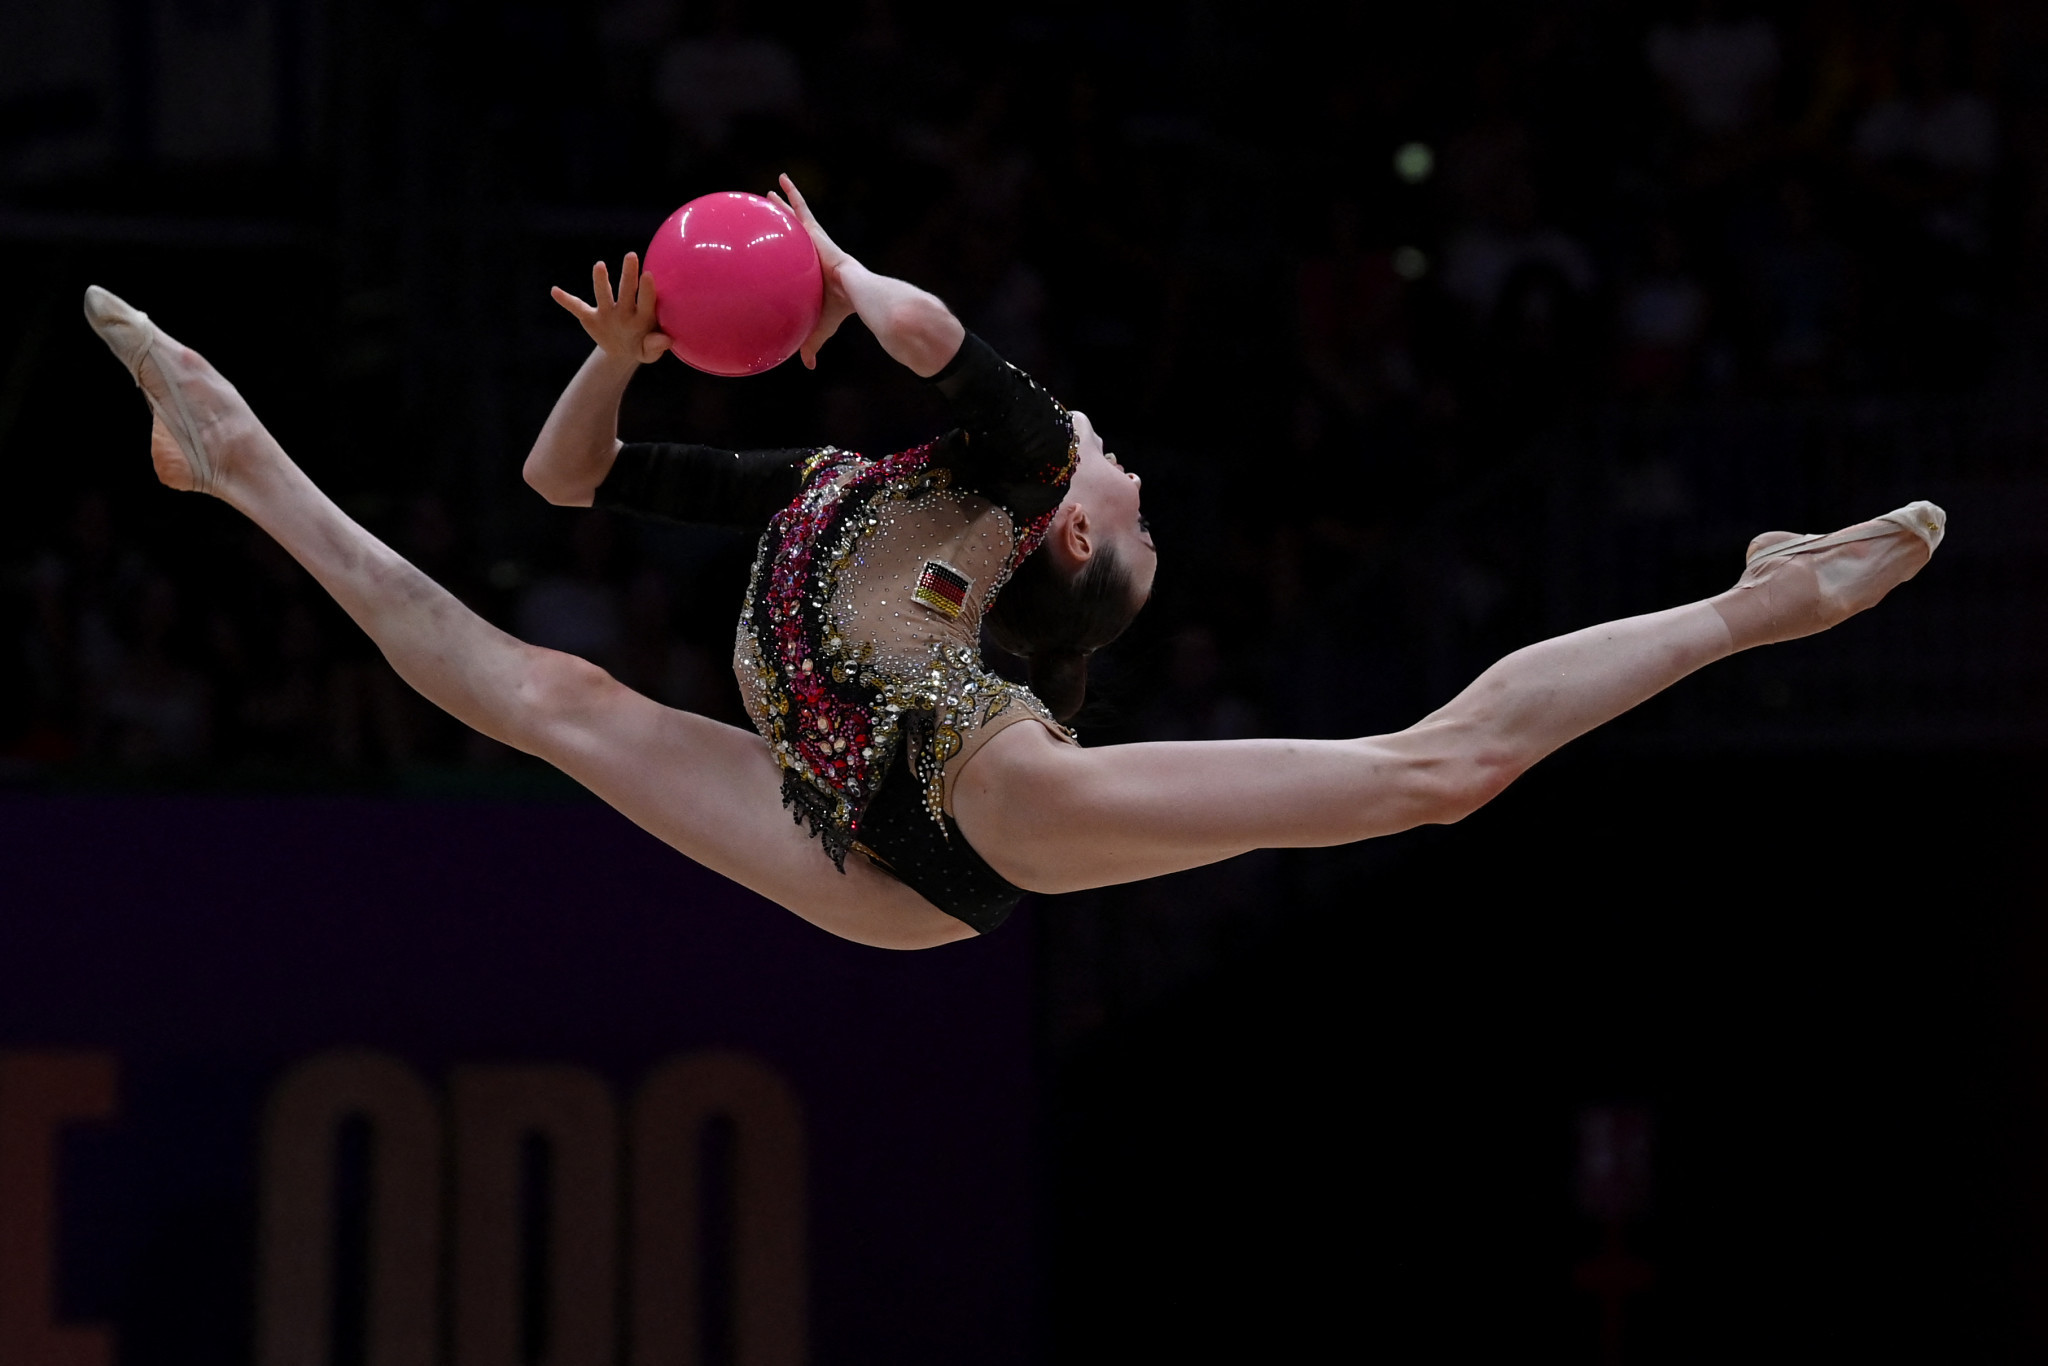 Double delight for Varfolomeev at Rhythmic Gymnastics World Championships